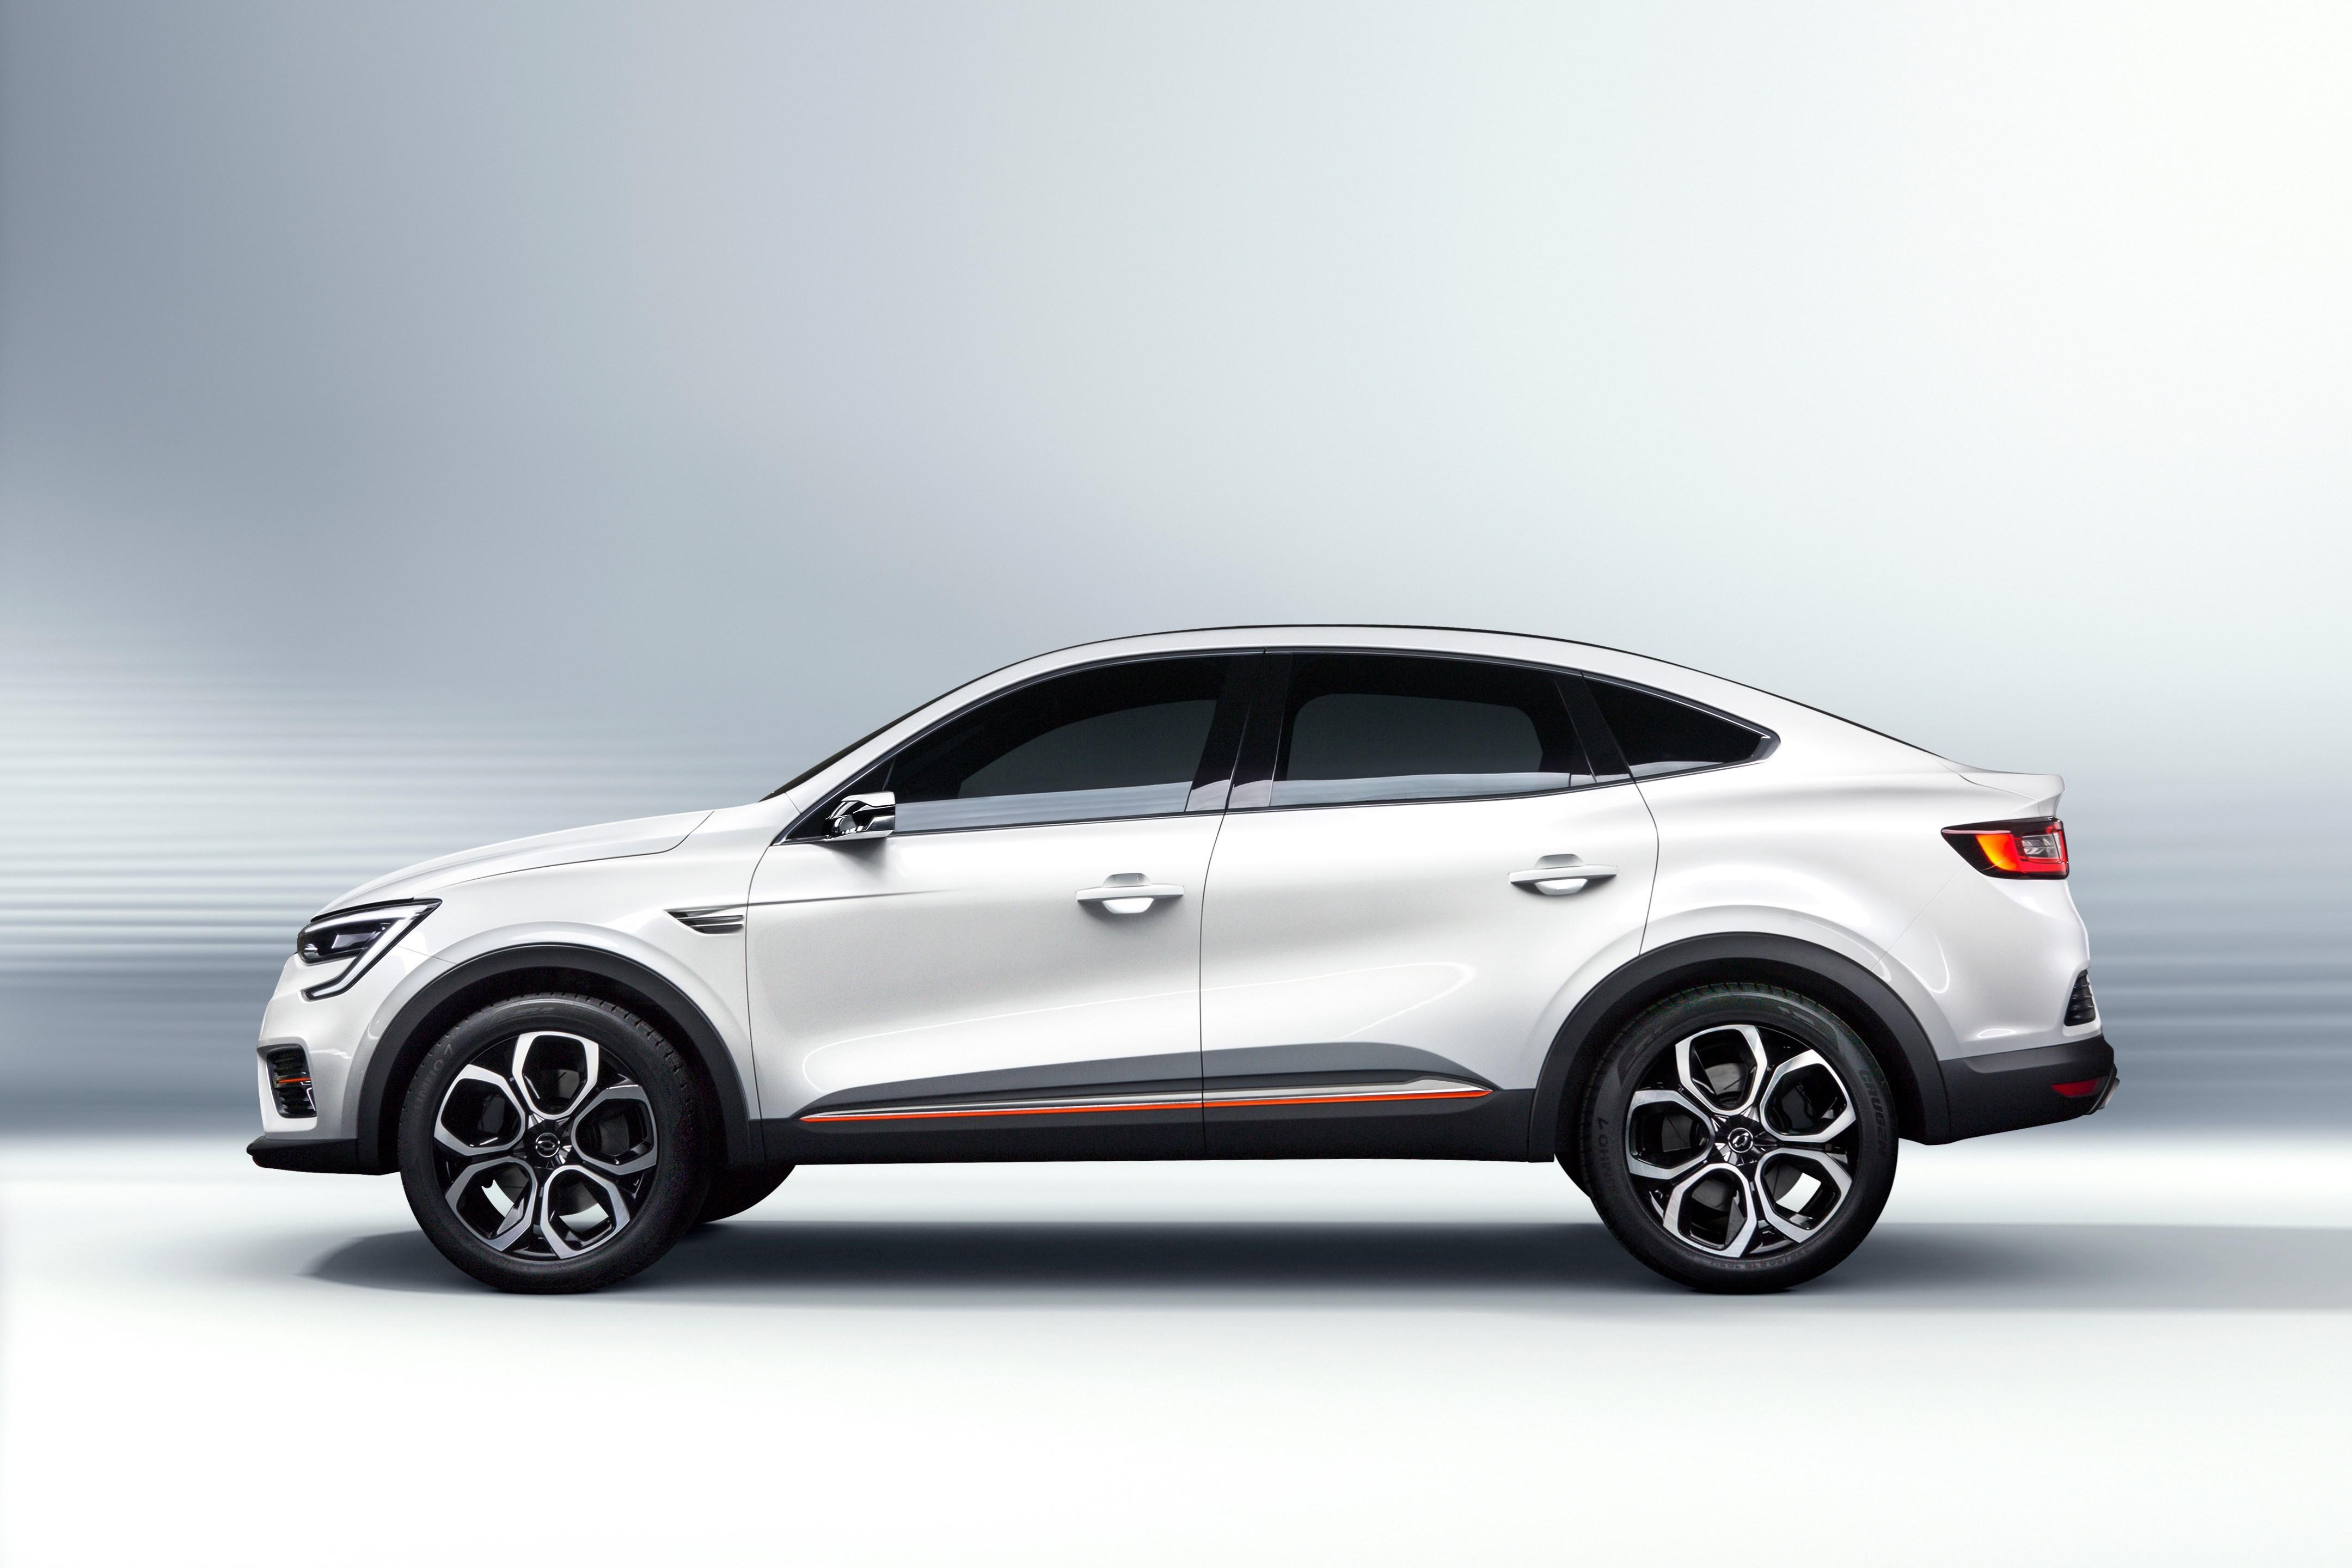 Renault Arkana mod specifications